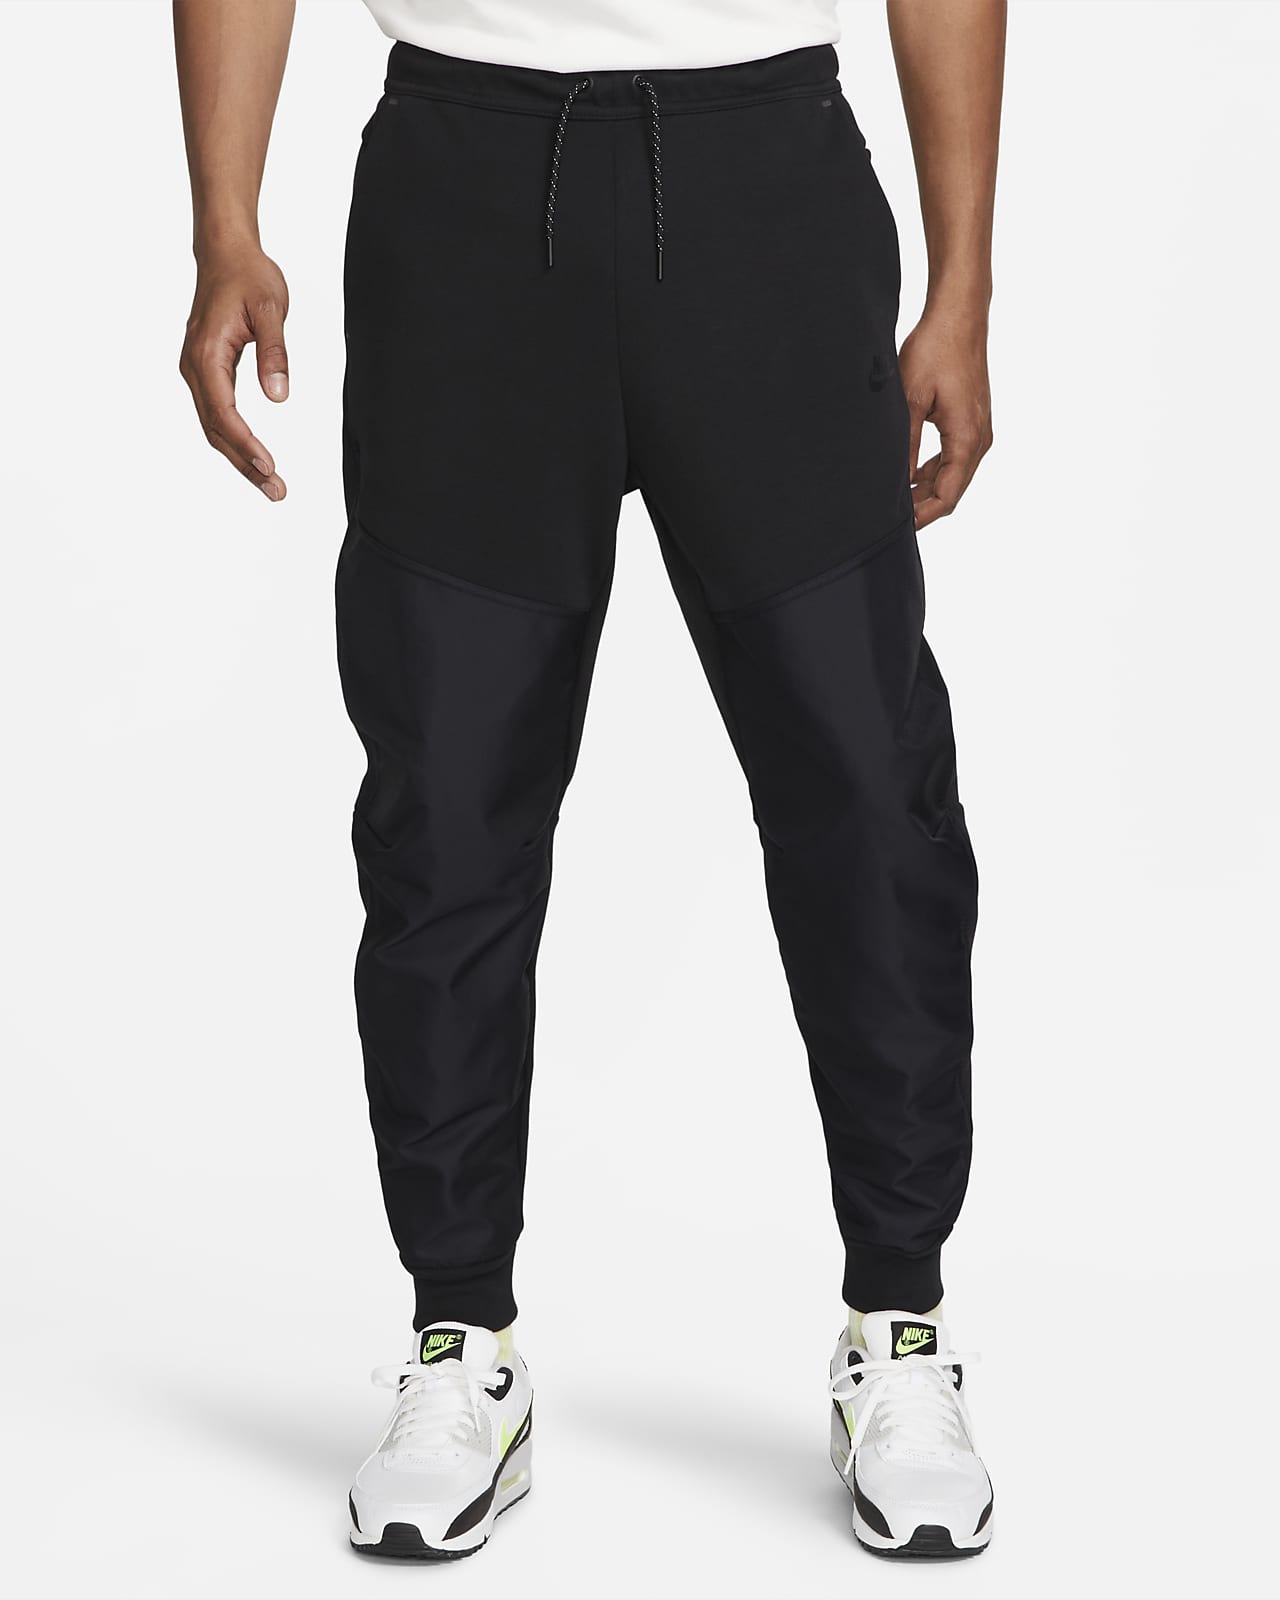 periodieke rit jam Nike Sportswear Tech Fleece Men's Joggers. Nike AT